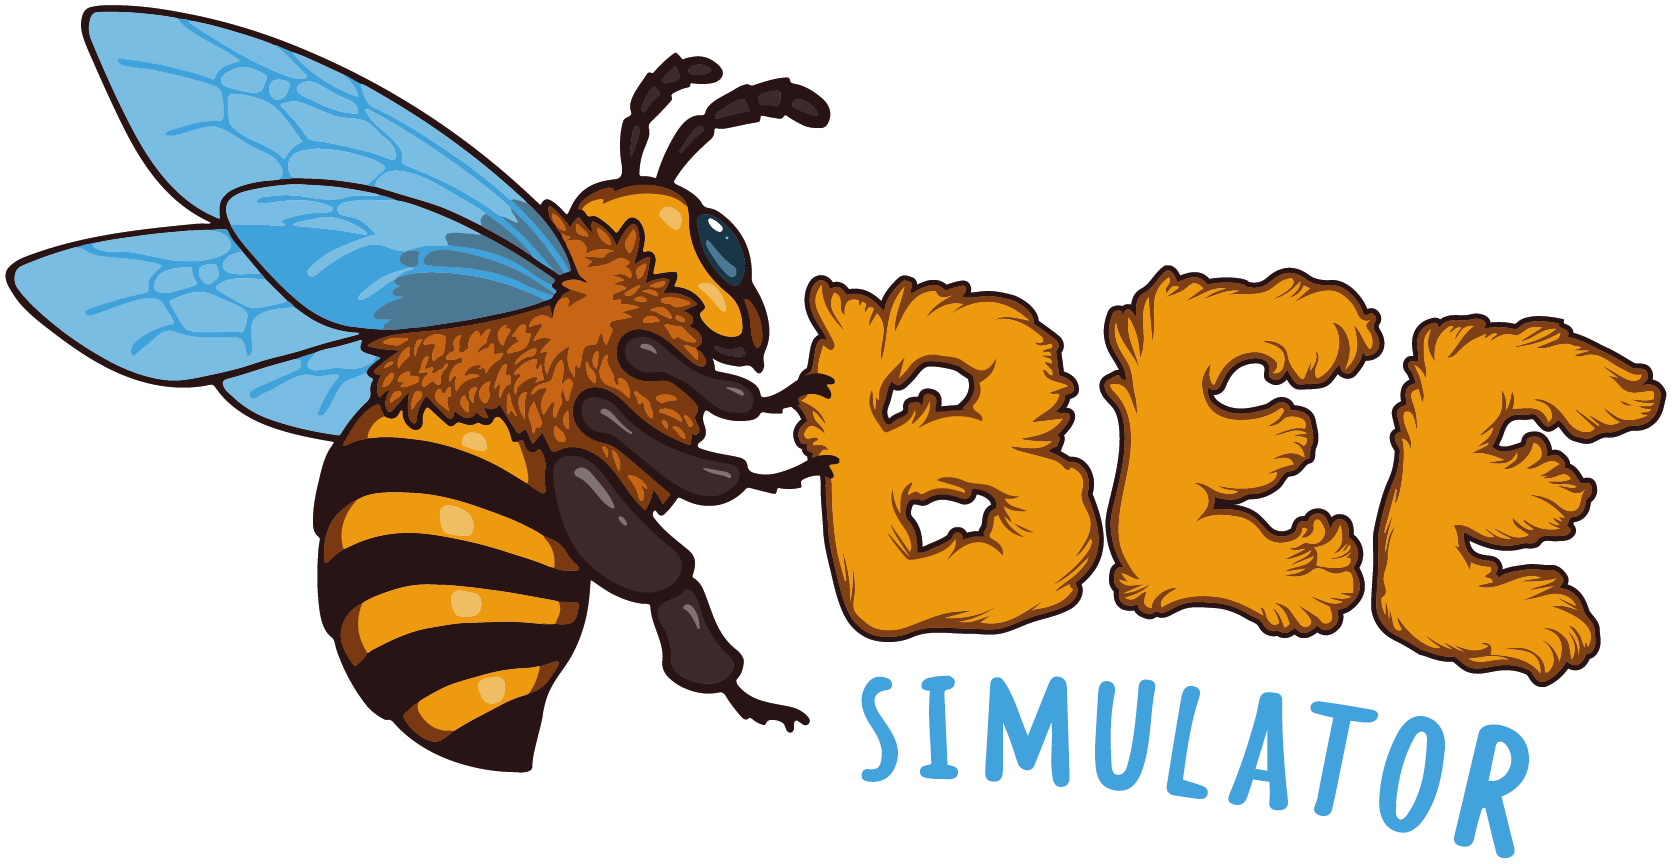 Bee Simulator ist ab sofort verfügbar